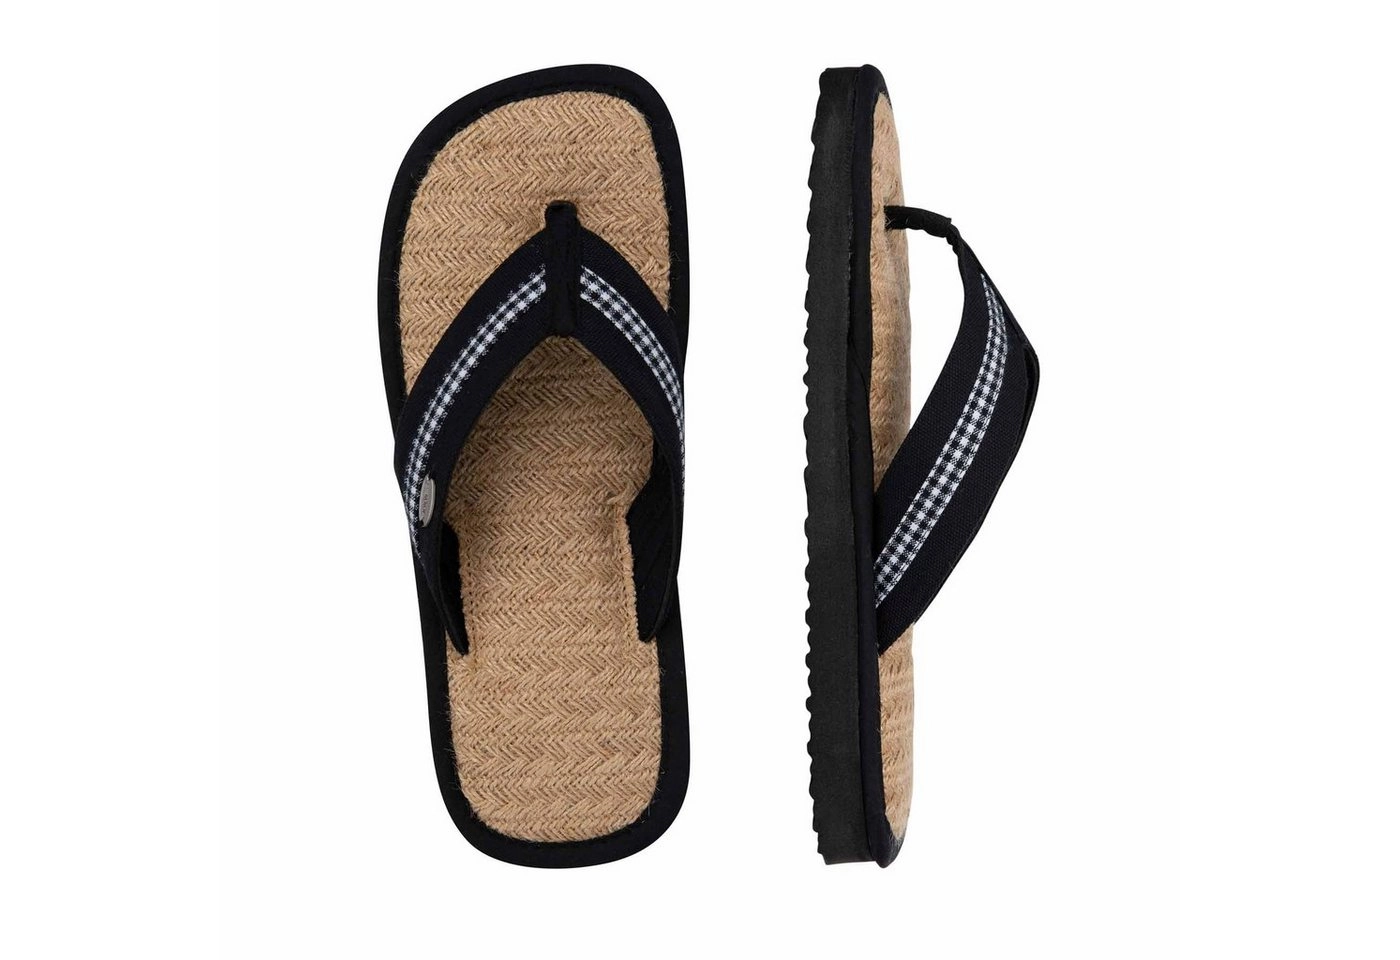 CINNEA »Bondy« Sandale Zimtlatschen, handgefertigt, mit Jute-Fußbett und Wellness-Zimtfüllung, gegen Hornhaut und Fußschweiß